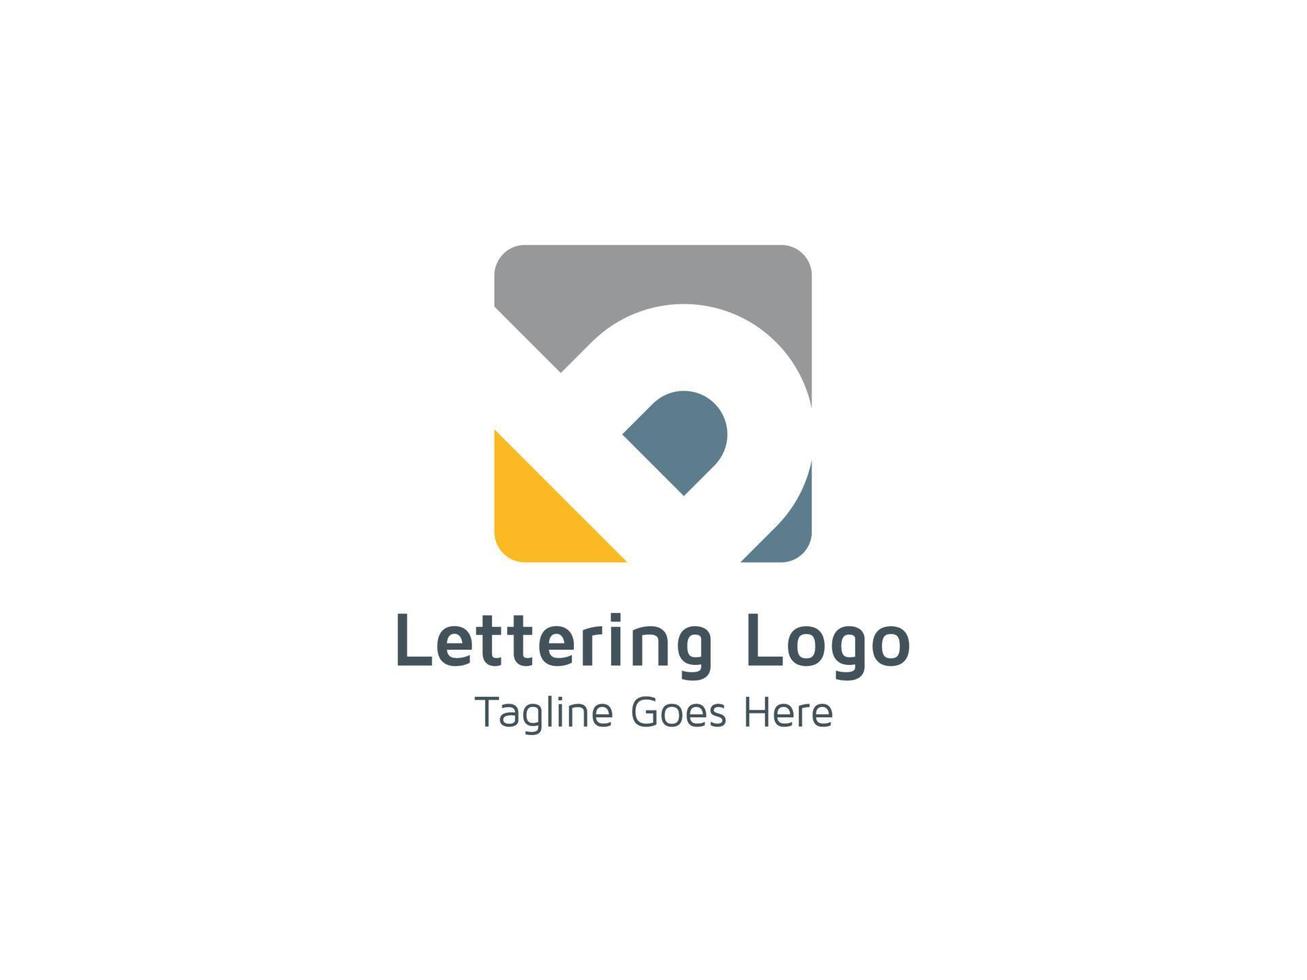 Letter B Logo Creative Design Template Free Pro Vector